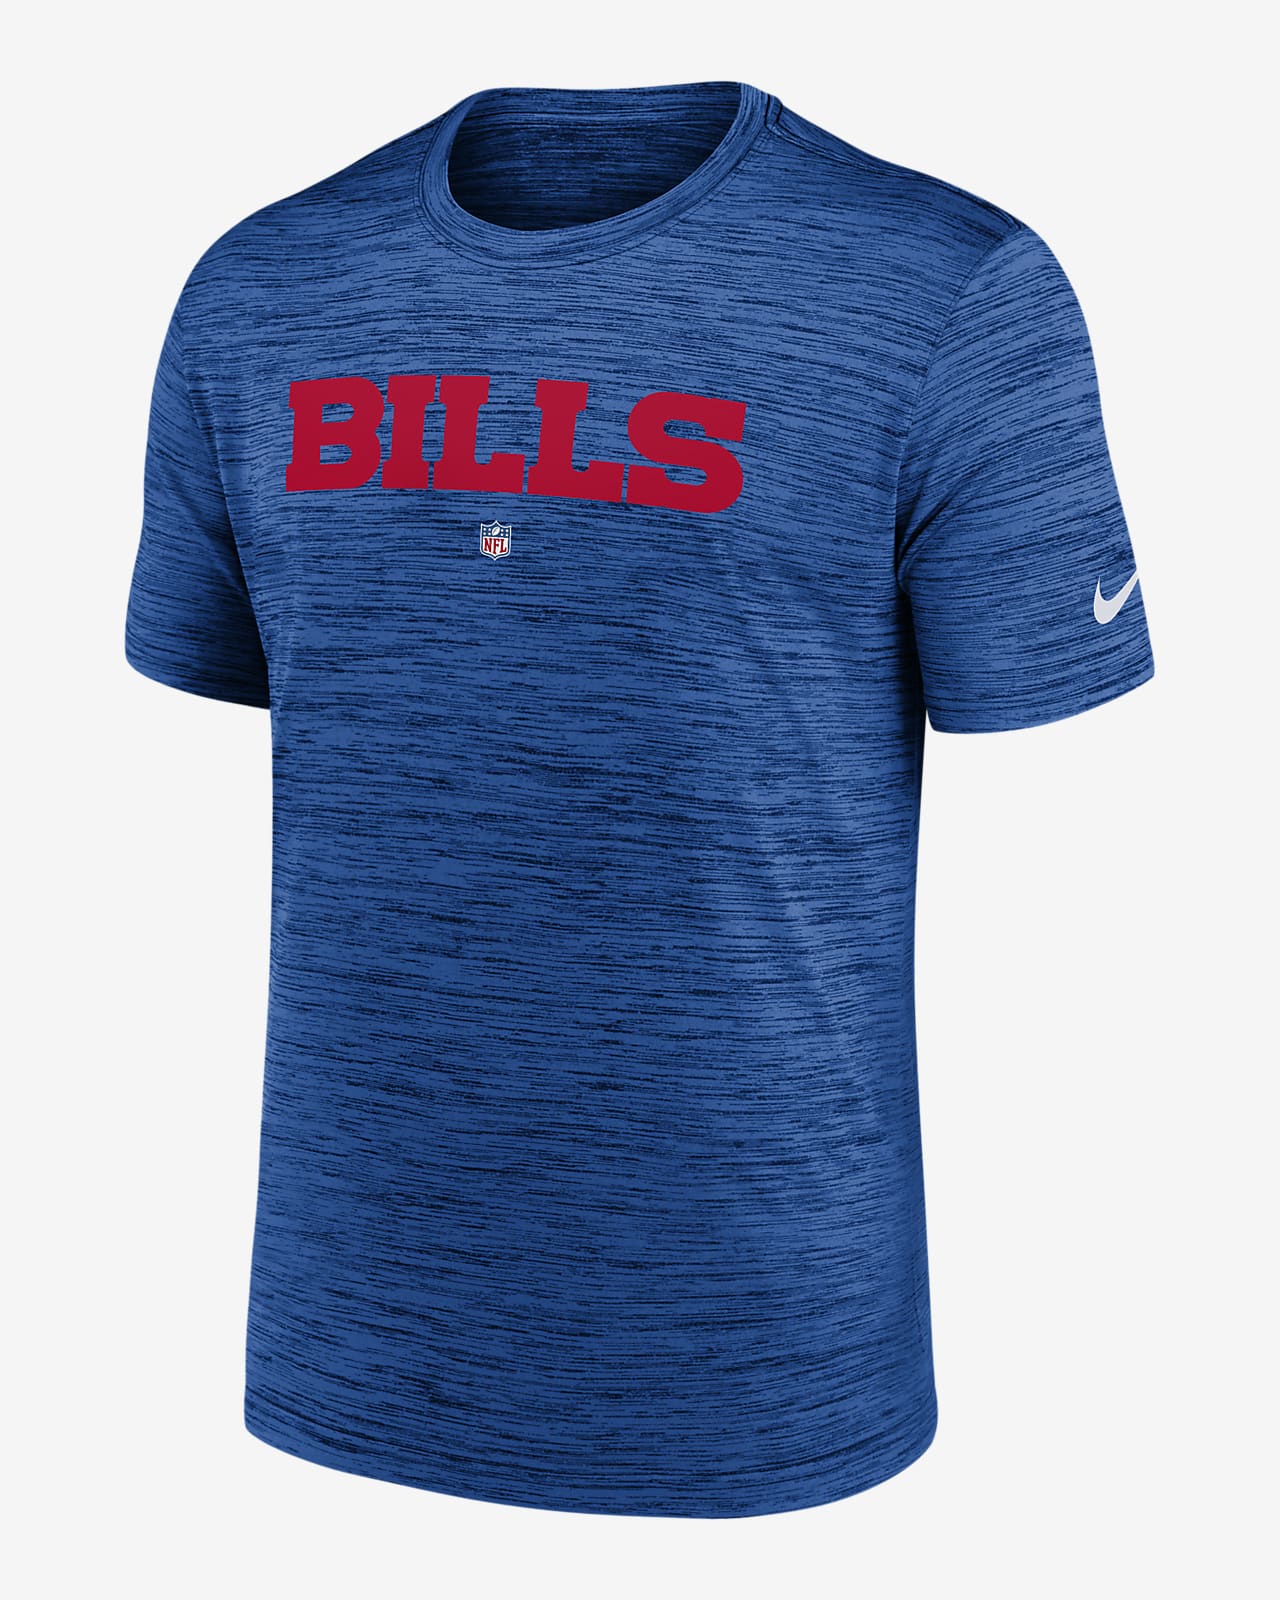 Nike Dri-FIT Sideline Velocity (NFL Buffalo Bills) Men's T-Shirt